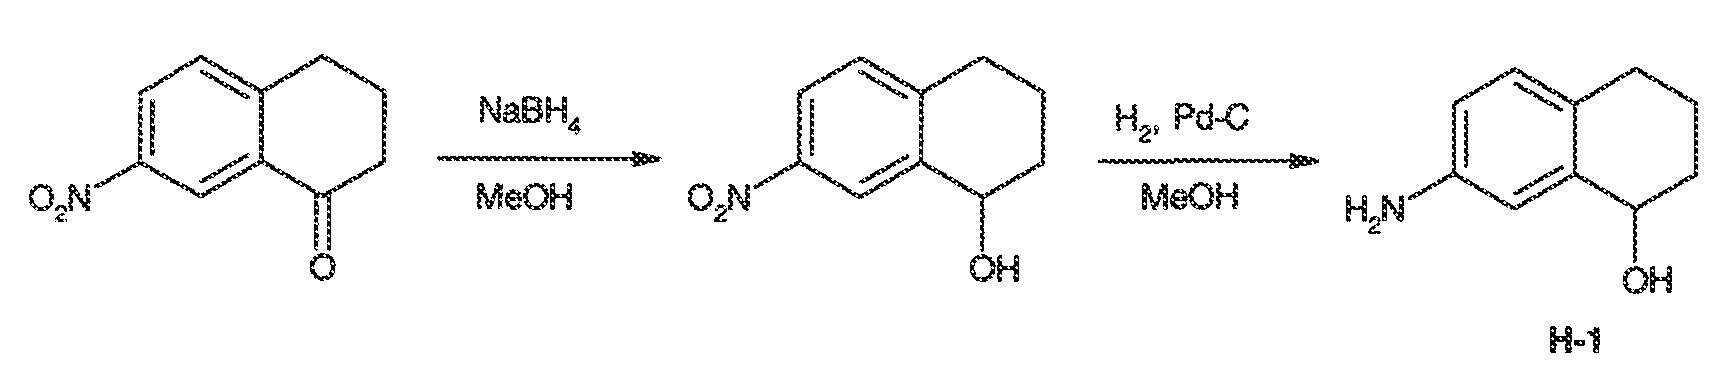 Нитробензол метанол. Нитрофенол nabh4. Нафталин + н2. Реакция померанца Фрича. Нафталин 1,2-дигидро.